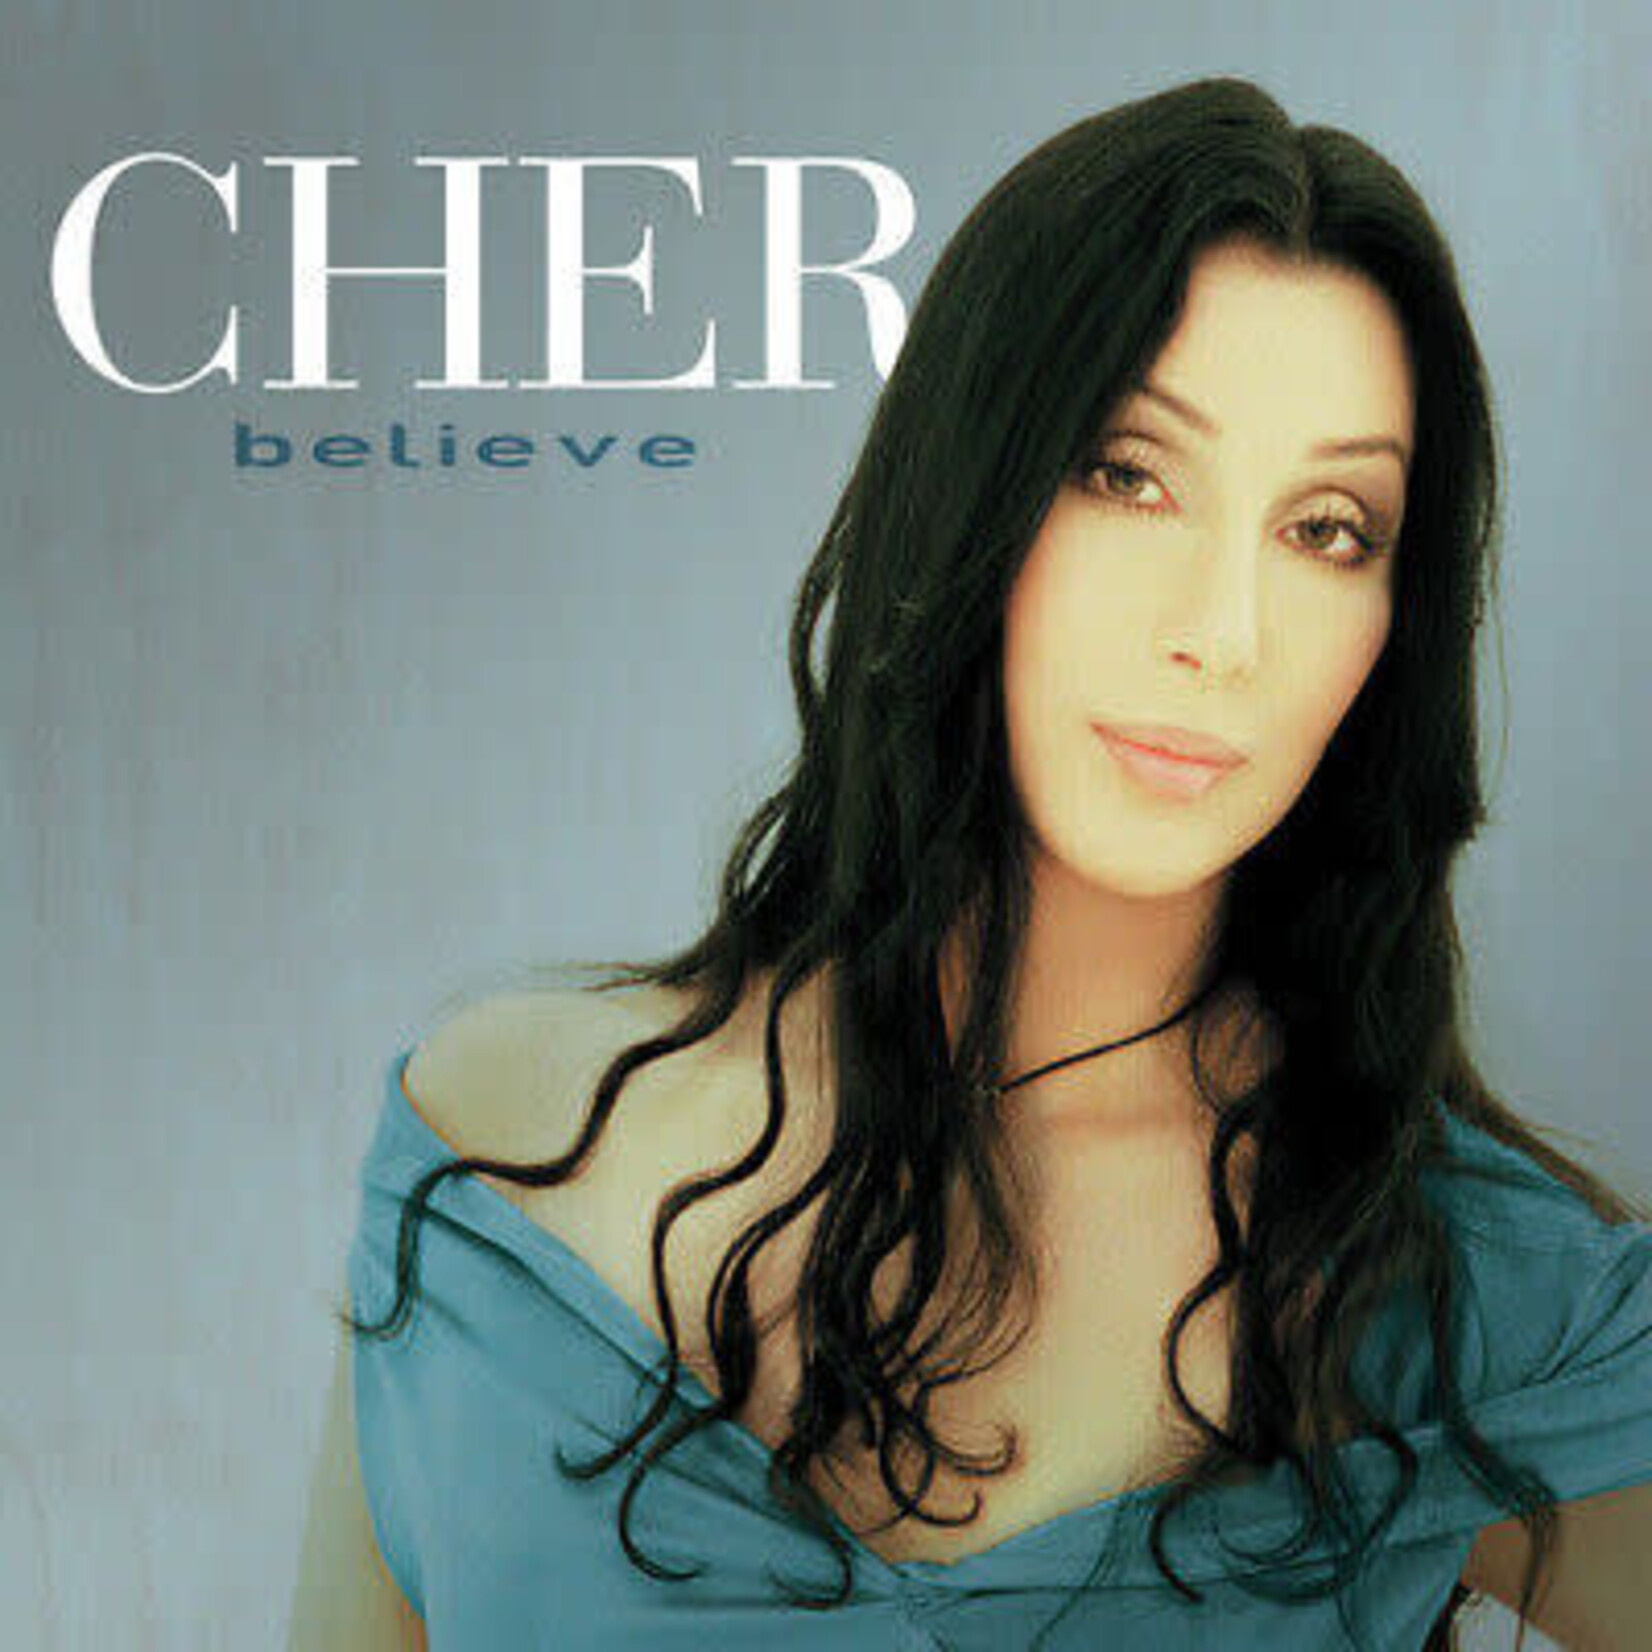 [New] Cher - Believe (2018 remaster)